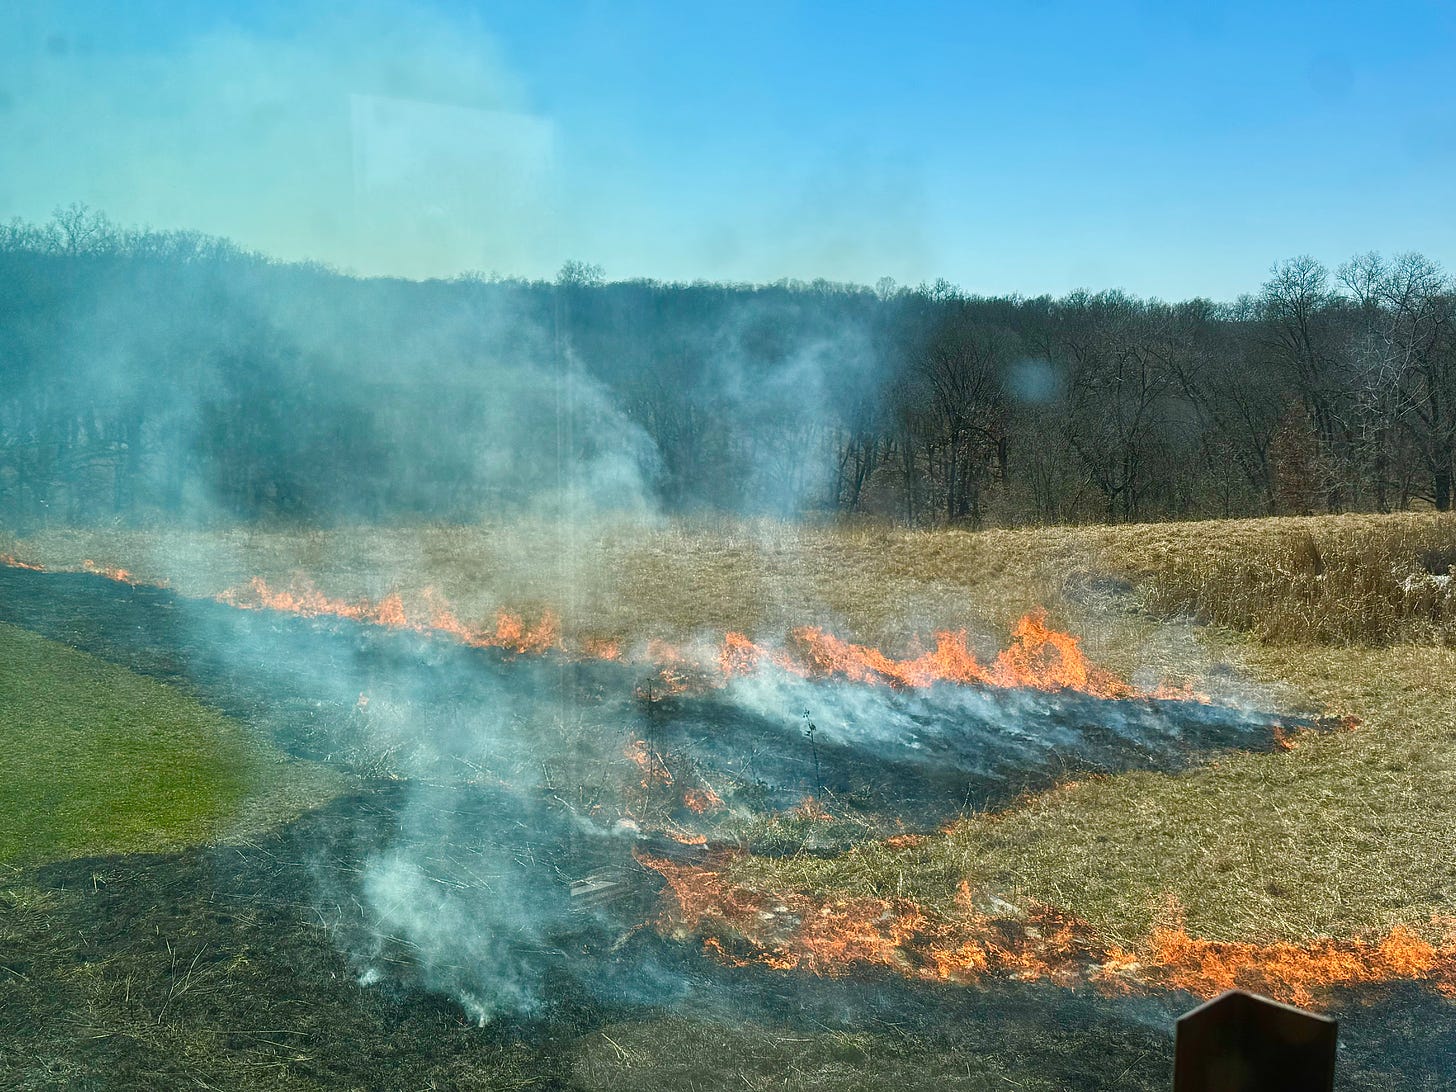 Controlled burn in a backyard prairie